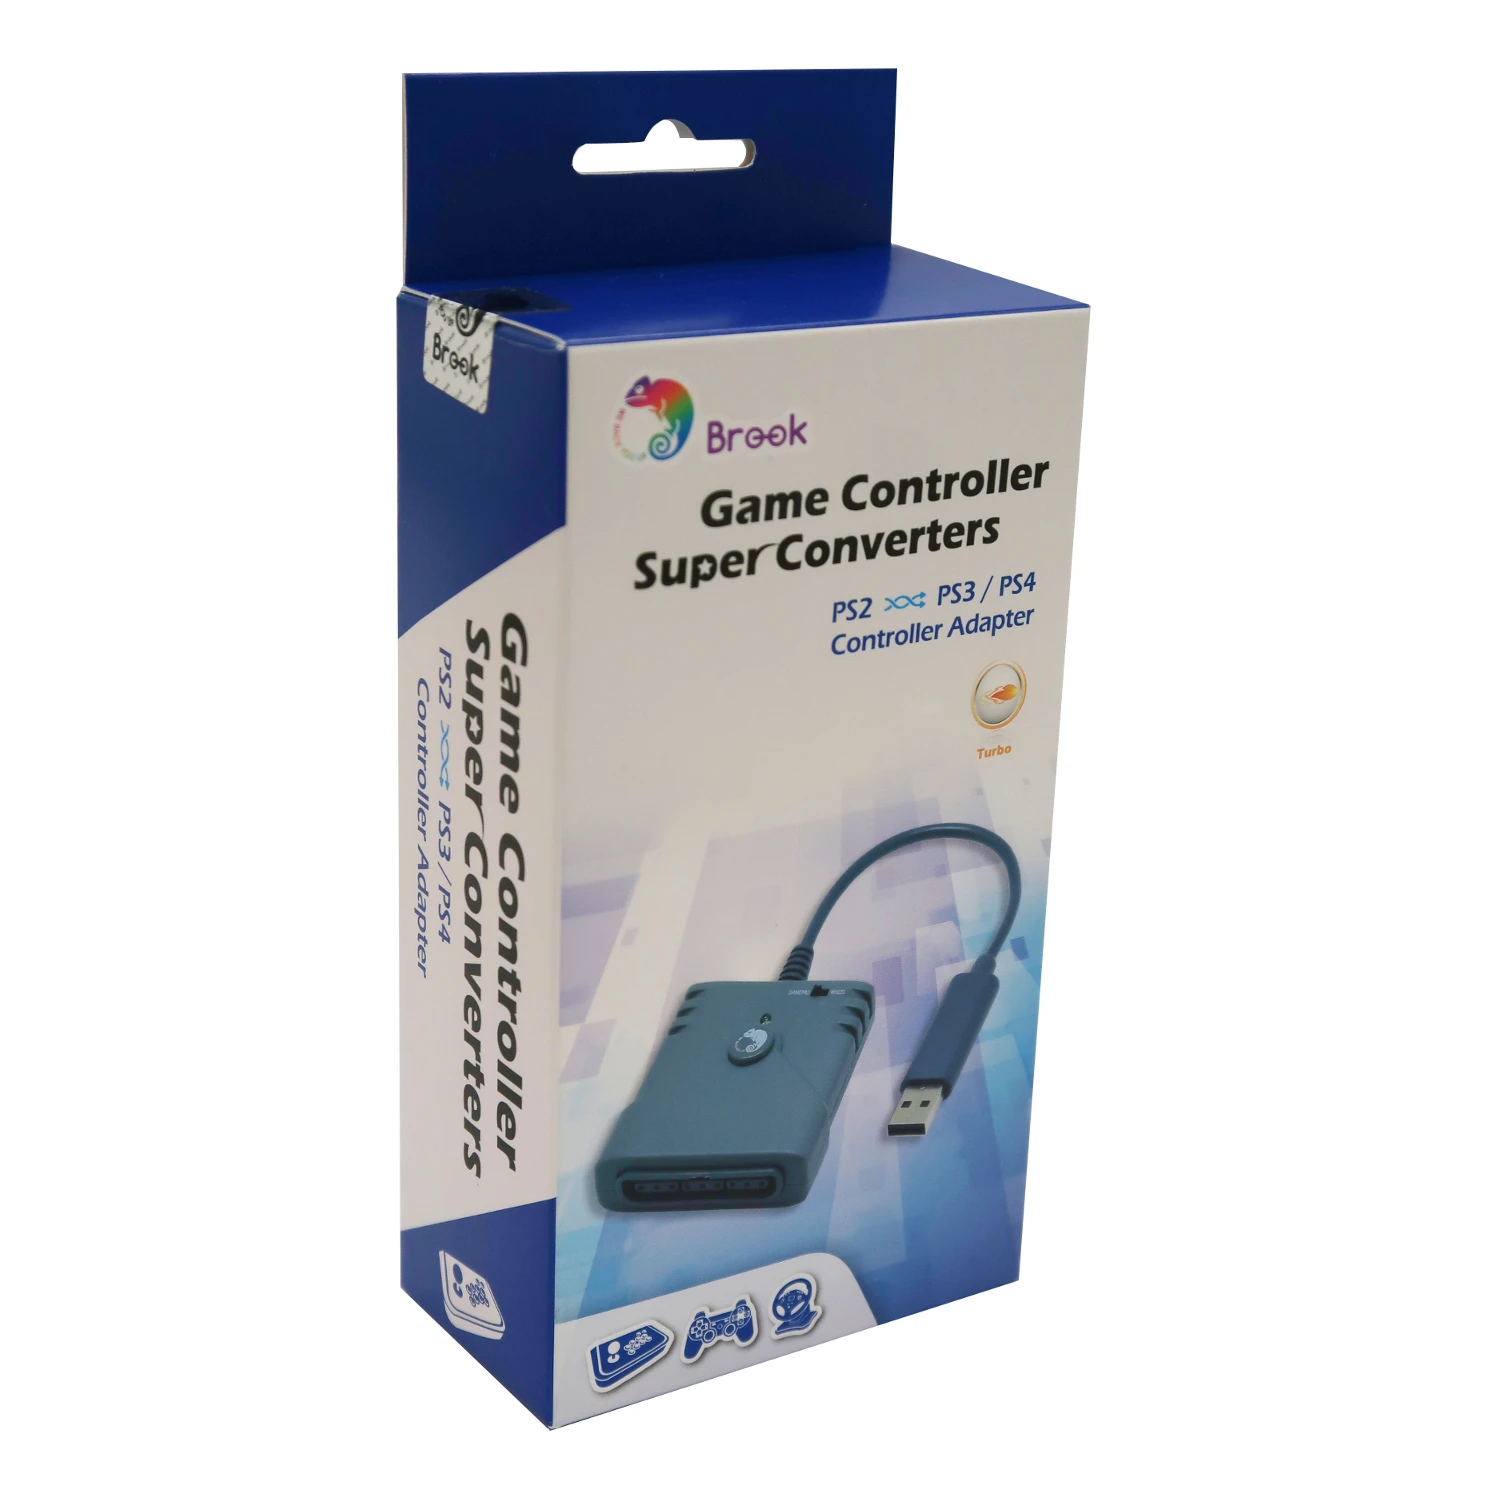 Суперконвертер Brook для PS2 на PS3 PS4/PC джойстик игровой контроллер USB адаптер Logitech/для